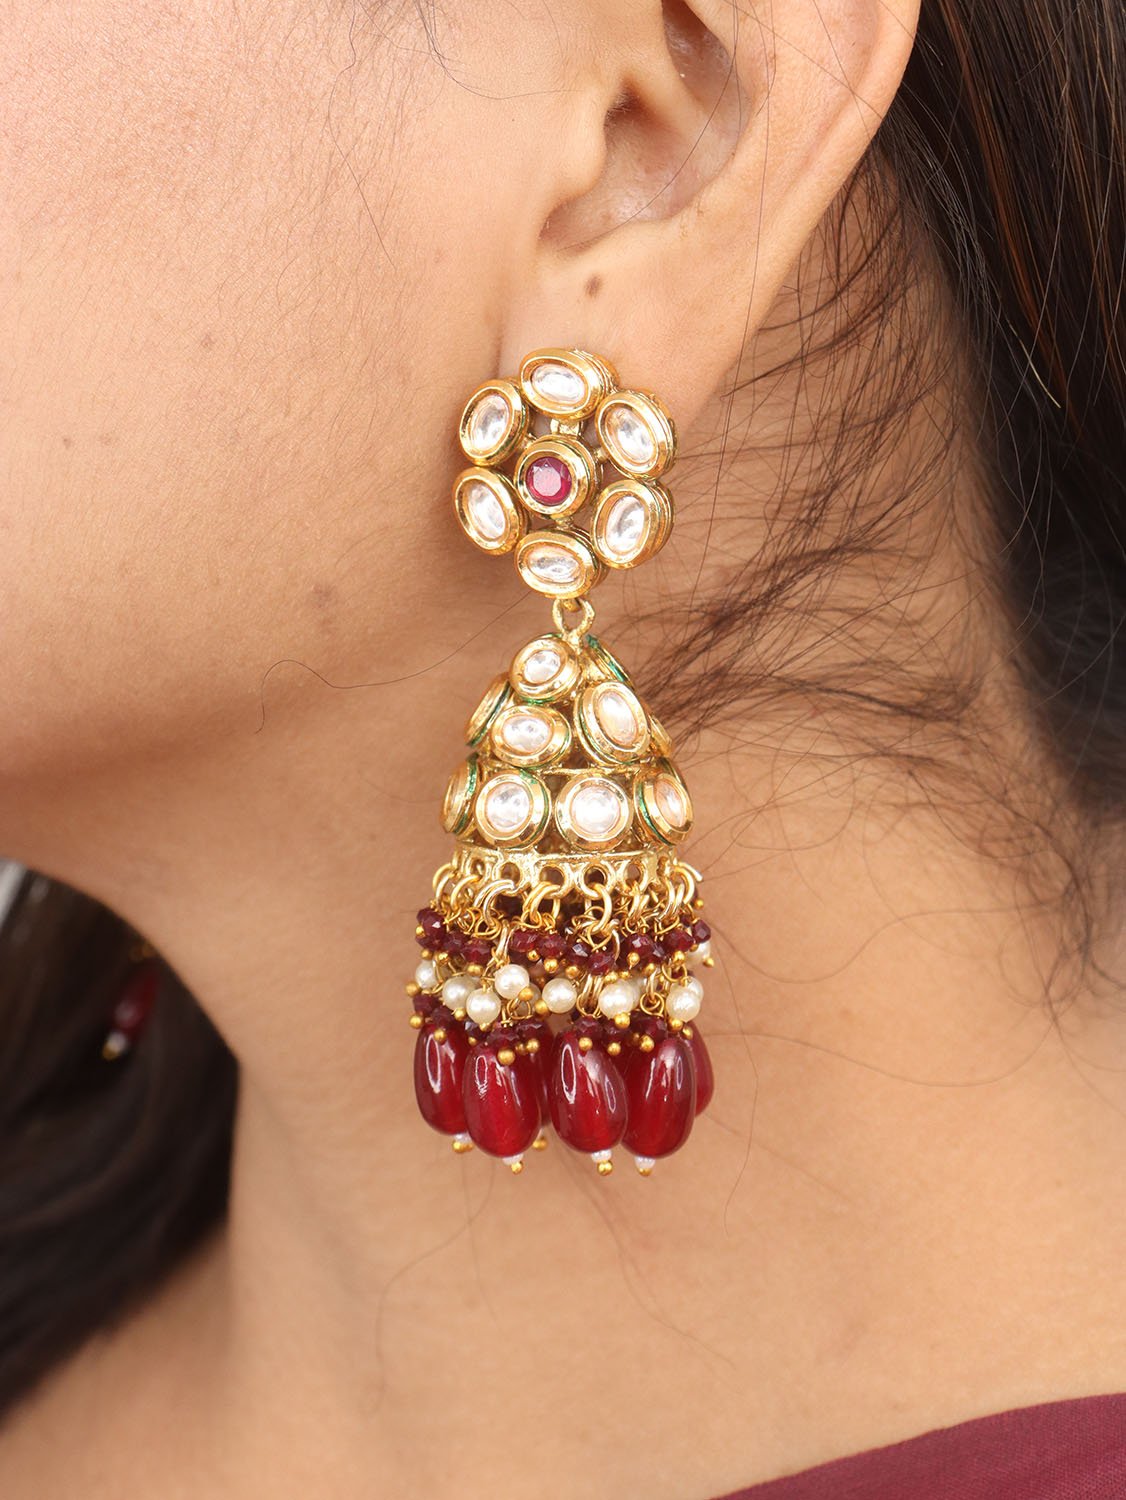 Shop Luxurionworld's Golden Delight Brass Earrings - Elevate Your Style Today! - Luxurion World